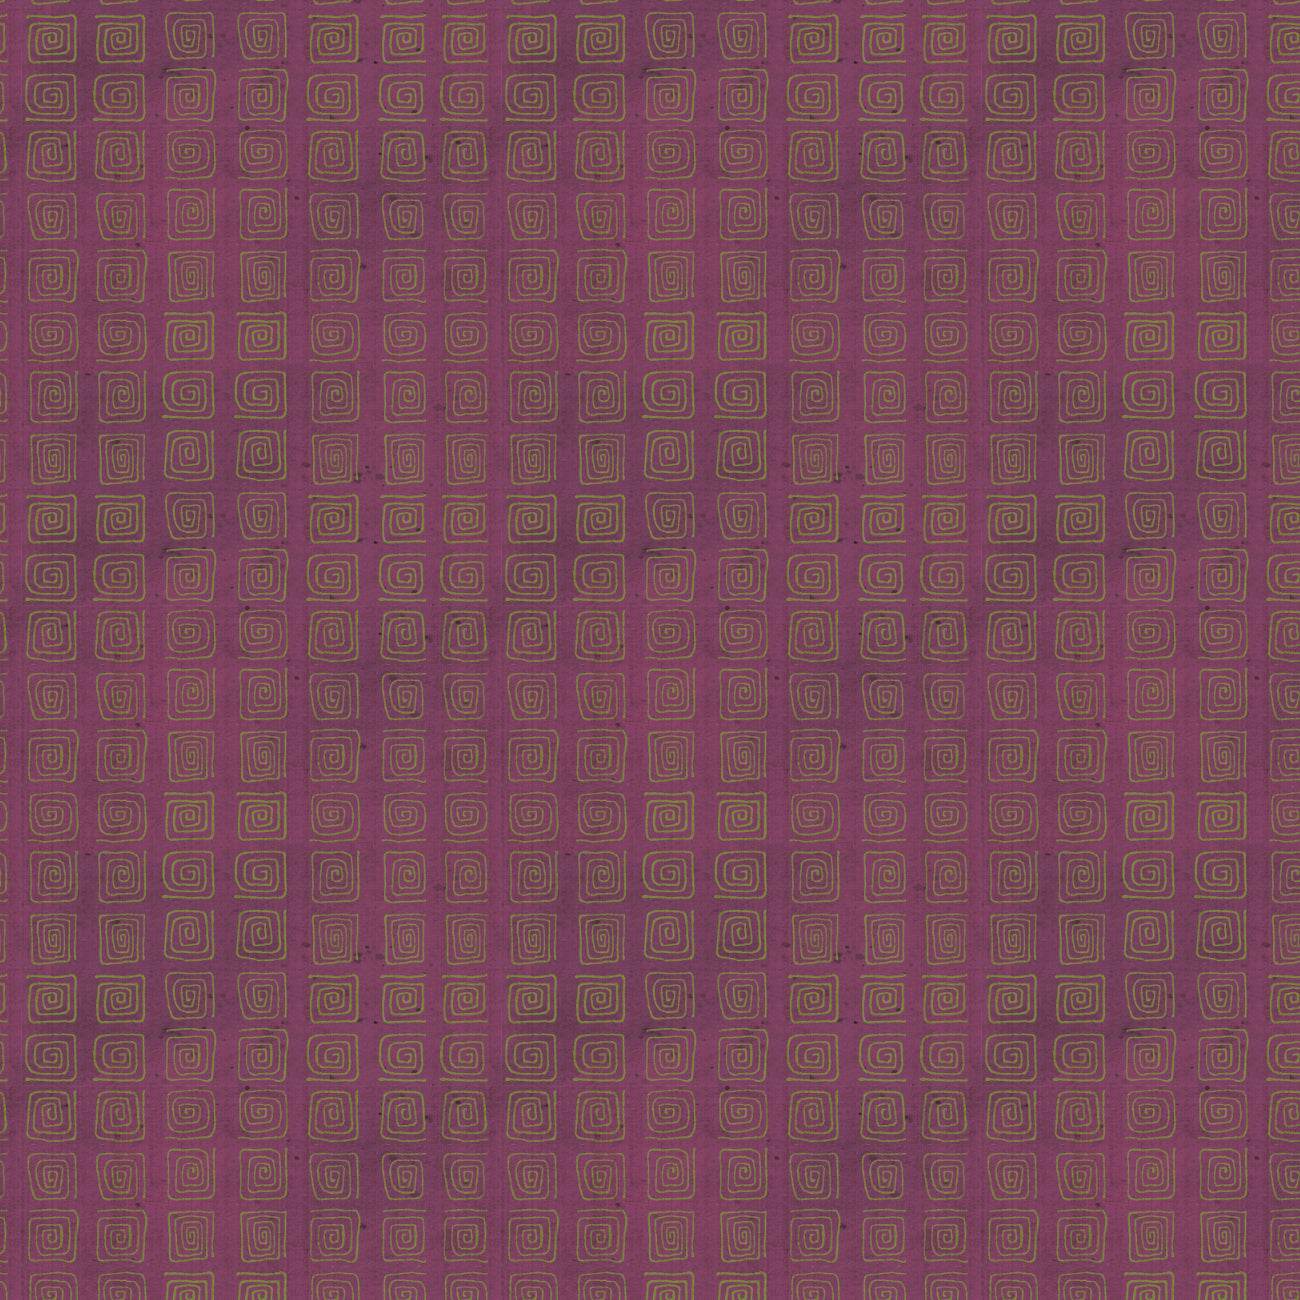 Aged Vineyard Collection-Trellis-100% Cotton-Purple-55230508-02